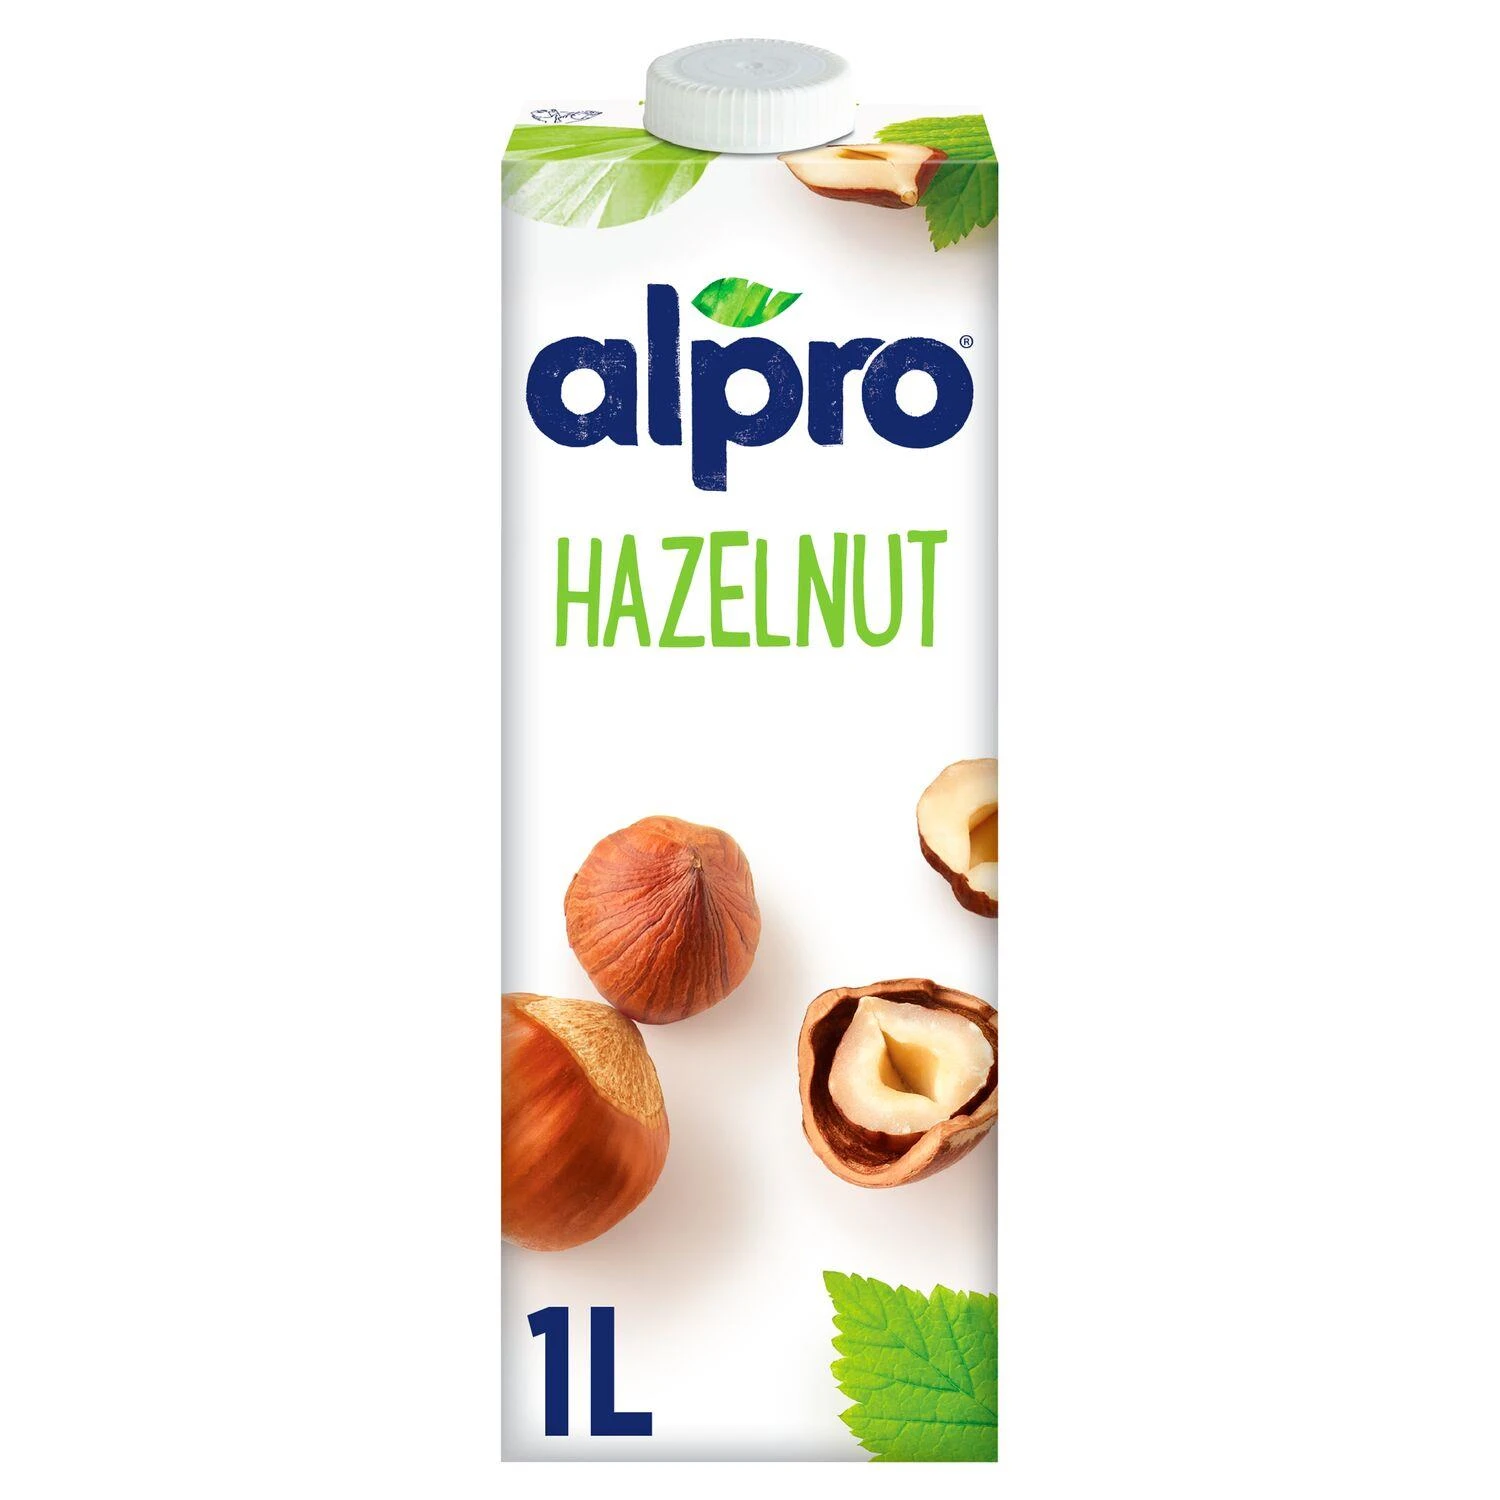 Alpro Hazelnut